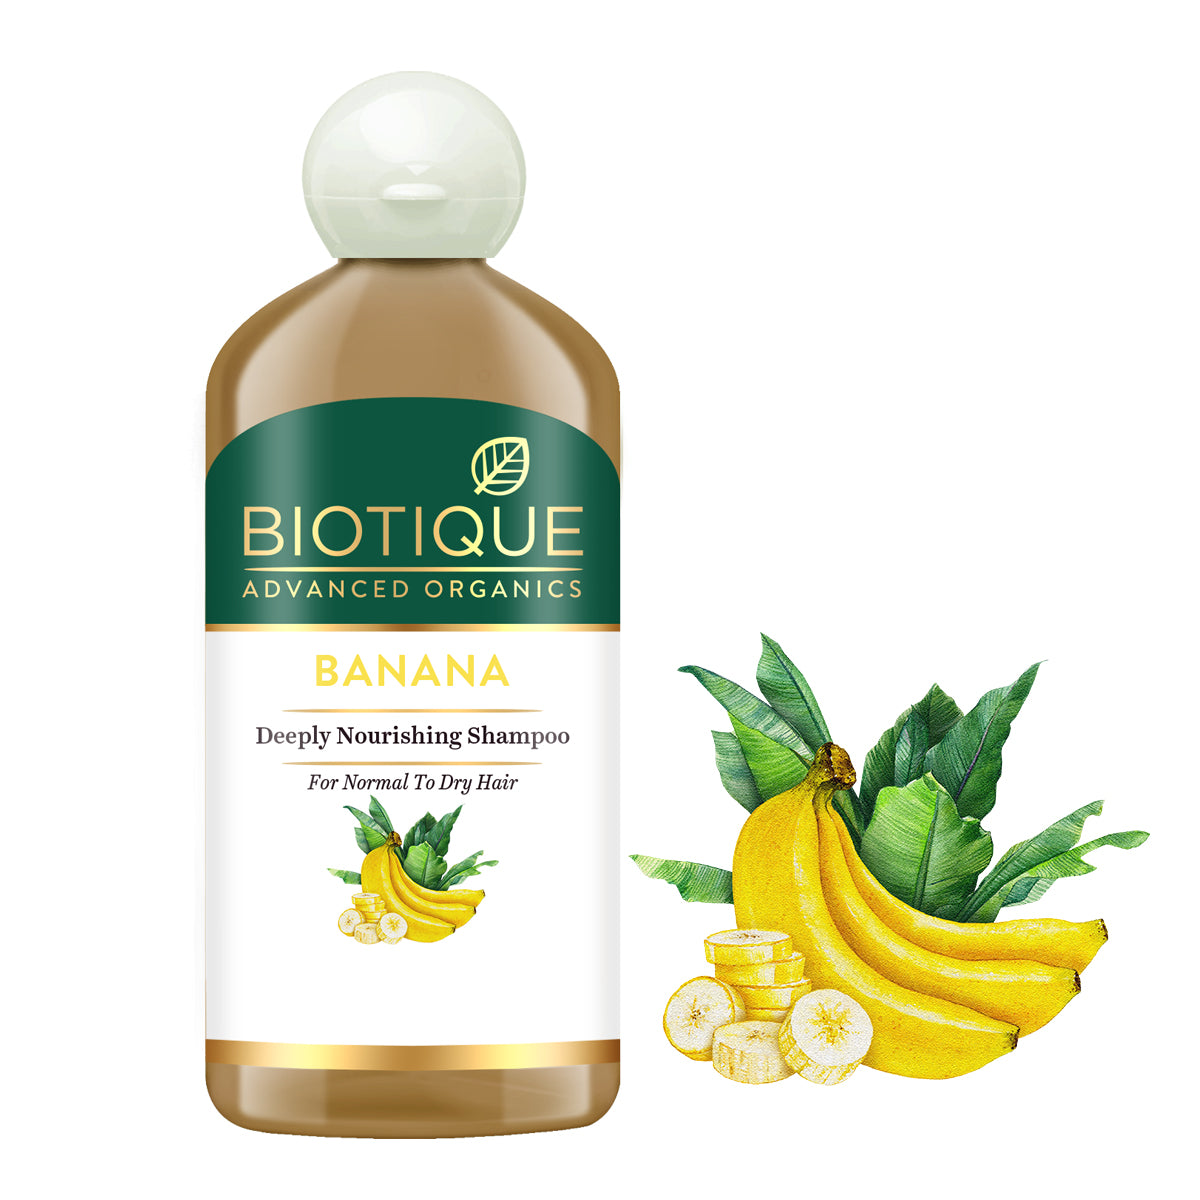 Banana deeply nourishing shampoo 300 ml